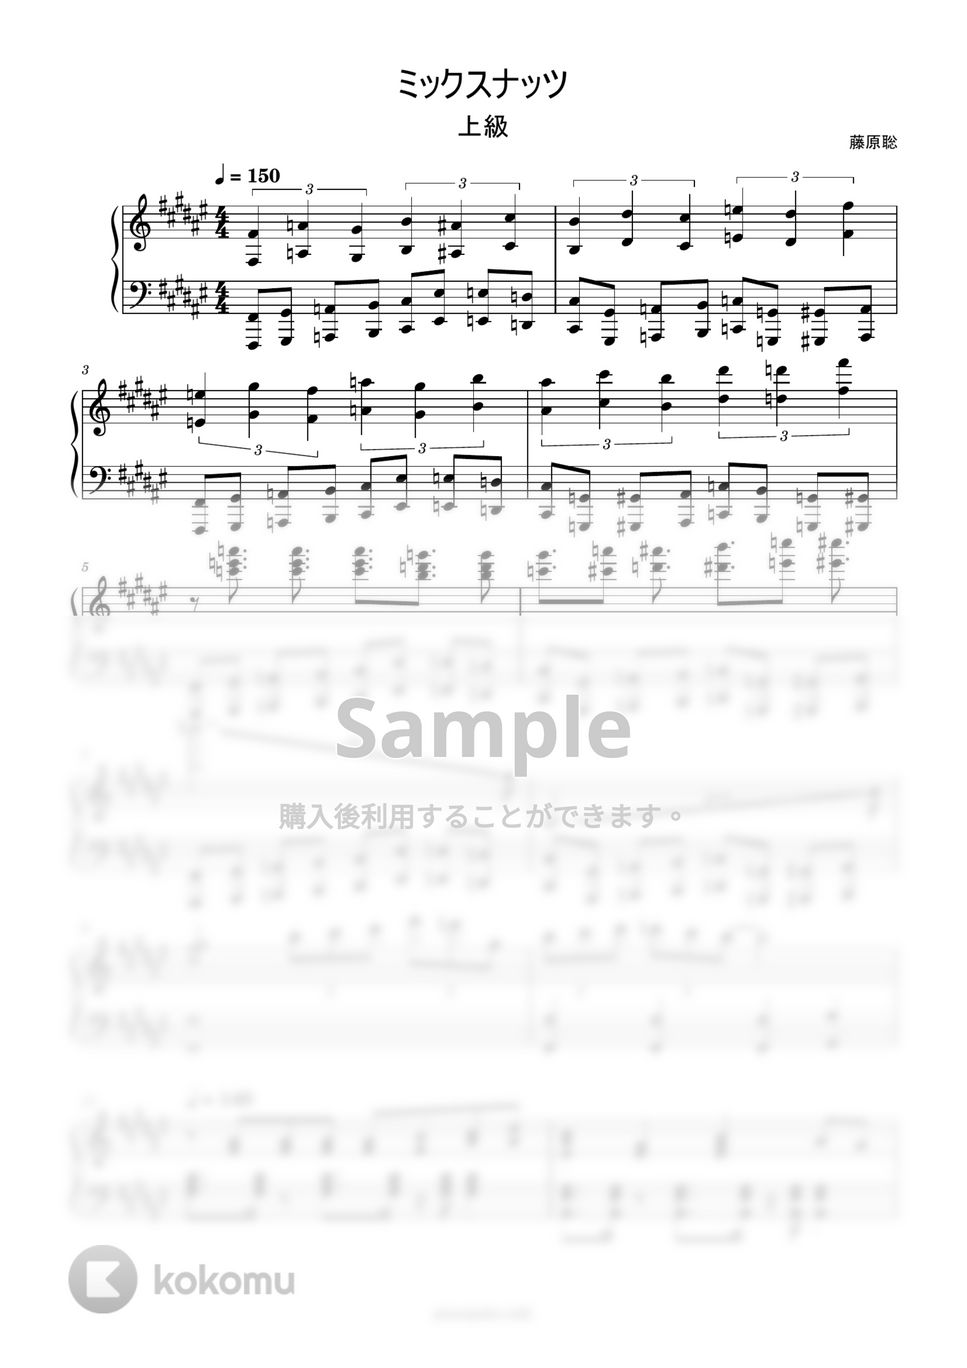 Official髭男dism - ミックスナッツ (コード中心ピアノアレンジ) by ピアノ塾